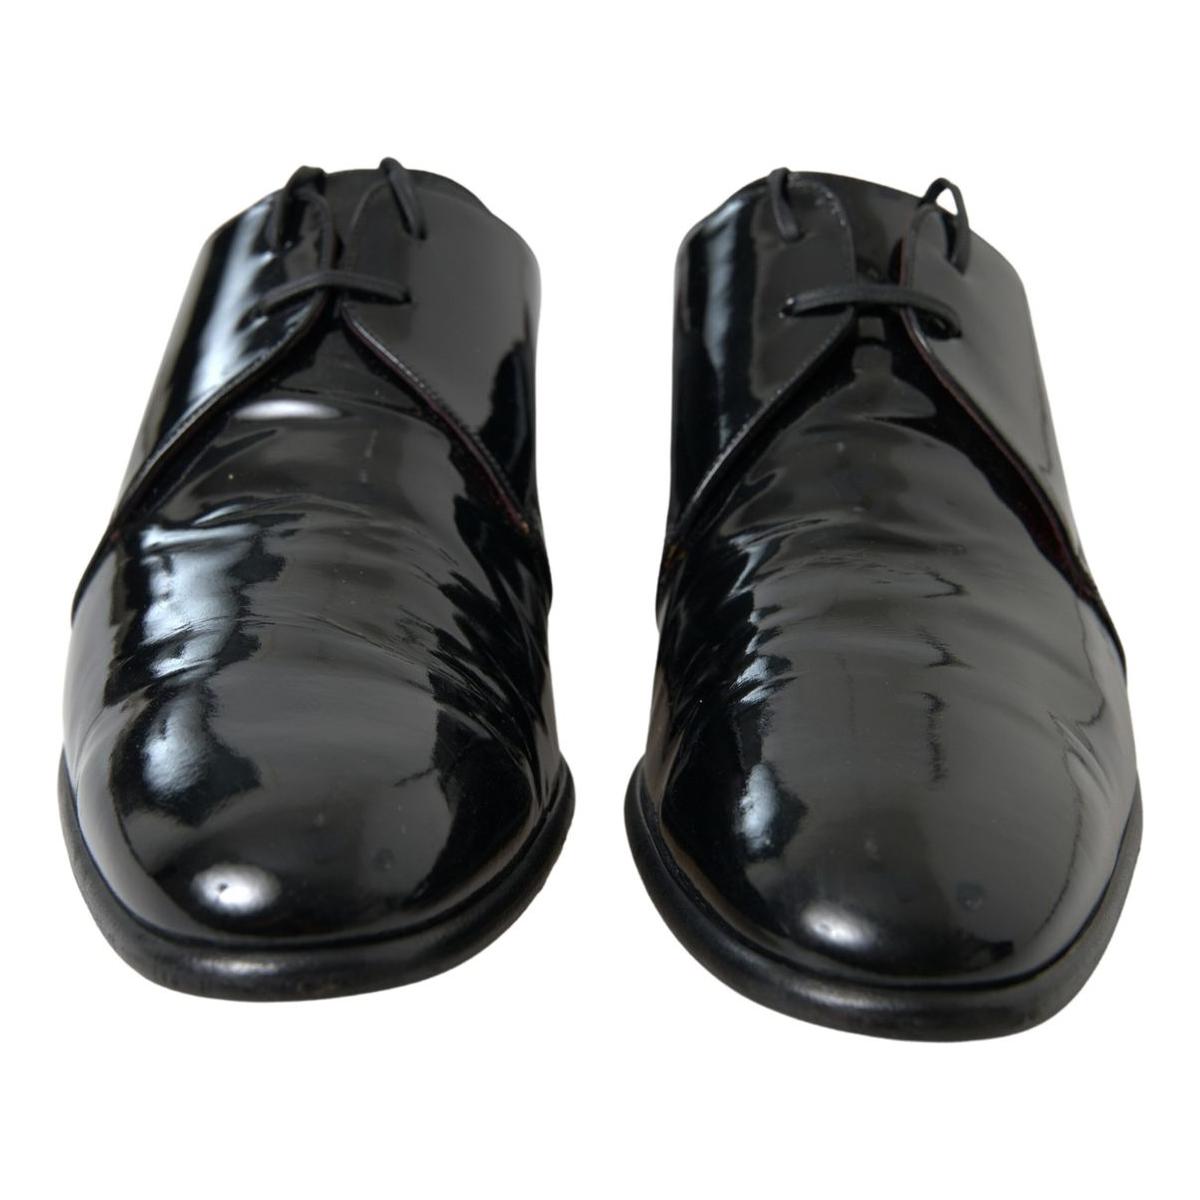 Dolce & Gabbana Elegant Black Patent Leather Formal Men's Shoes elegant-black-patent-leather-formal-mens-shoes